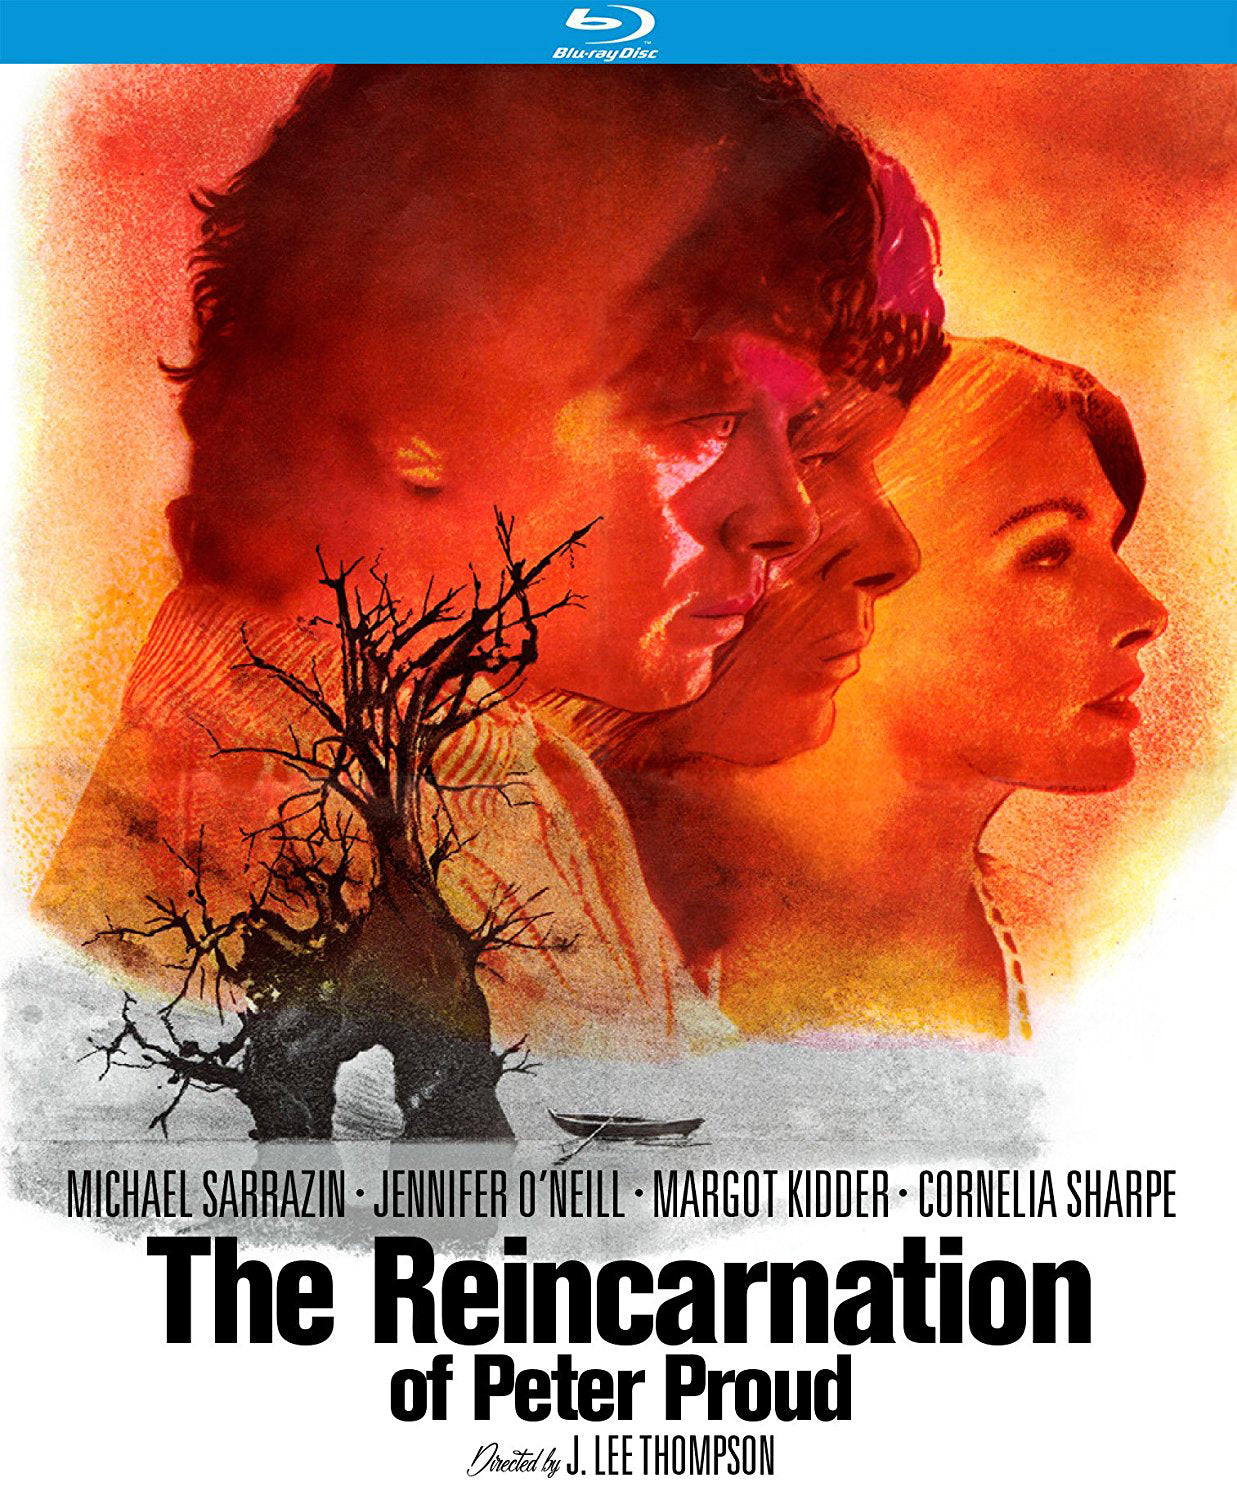 Reincarnation of Peter Proud [Blu-ray] cover art